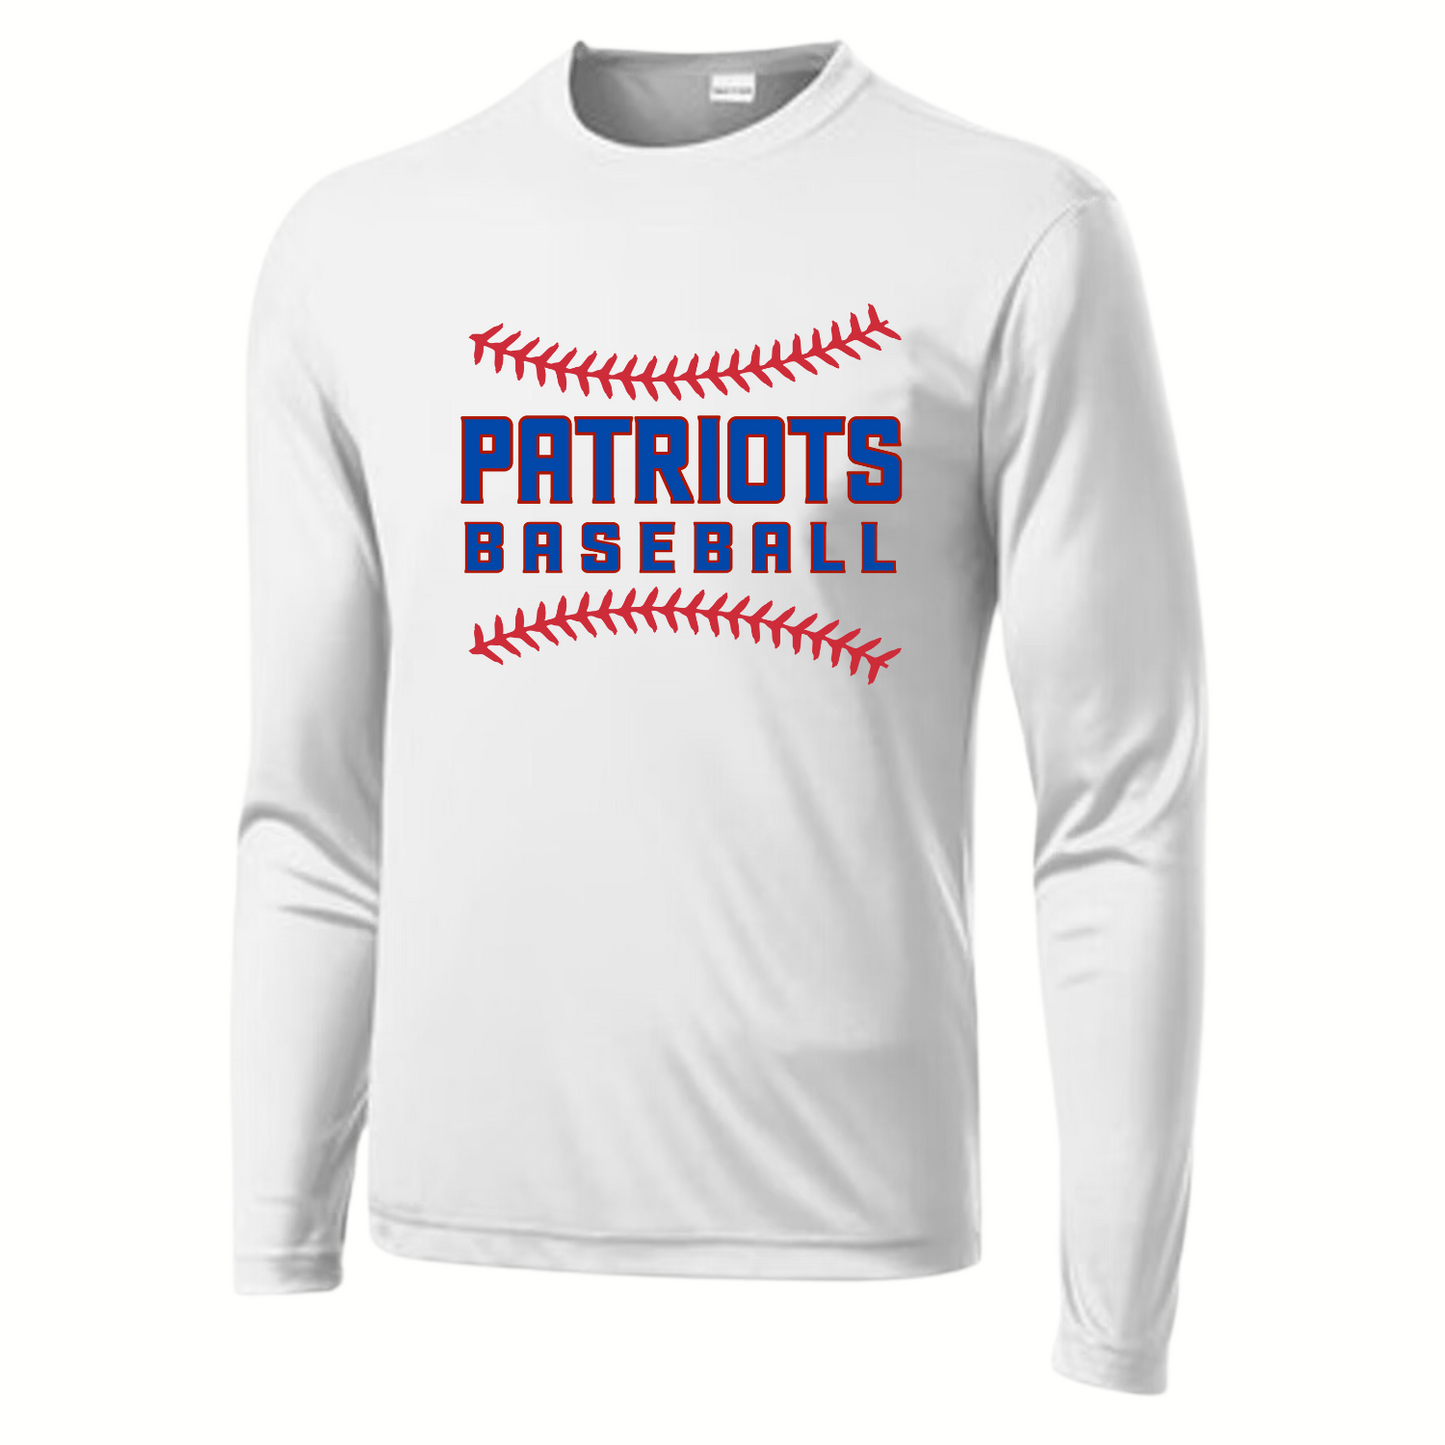 Patriots Baseball Stitching Adult Long Sleeve Dri-Wick Tee